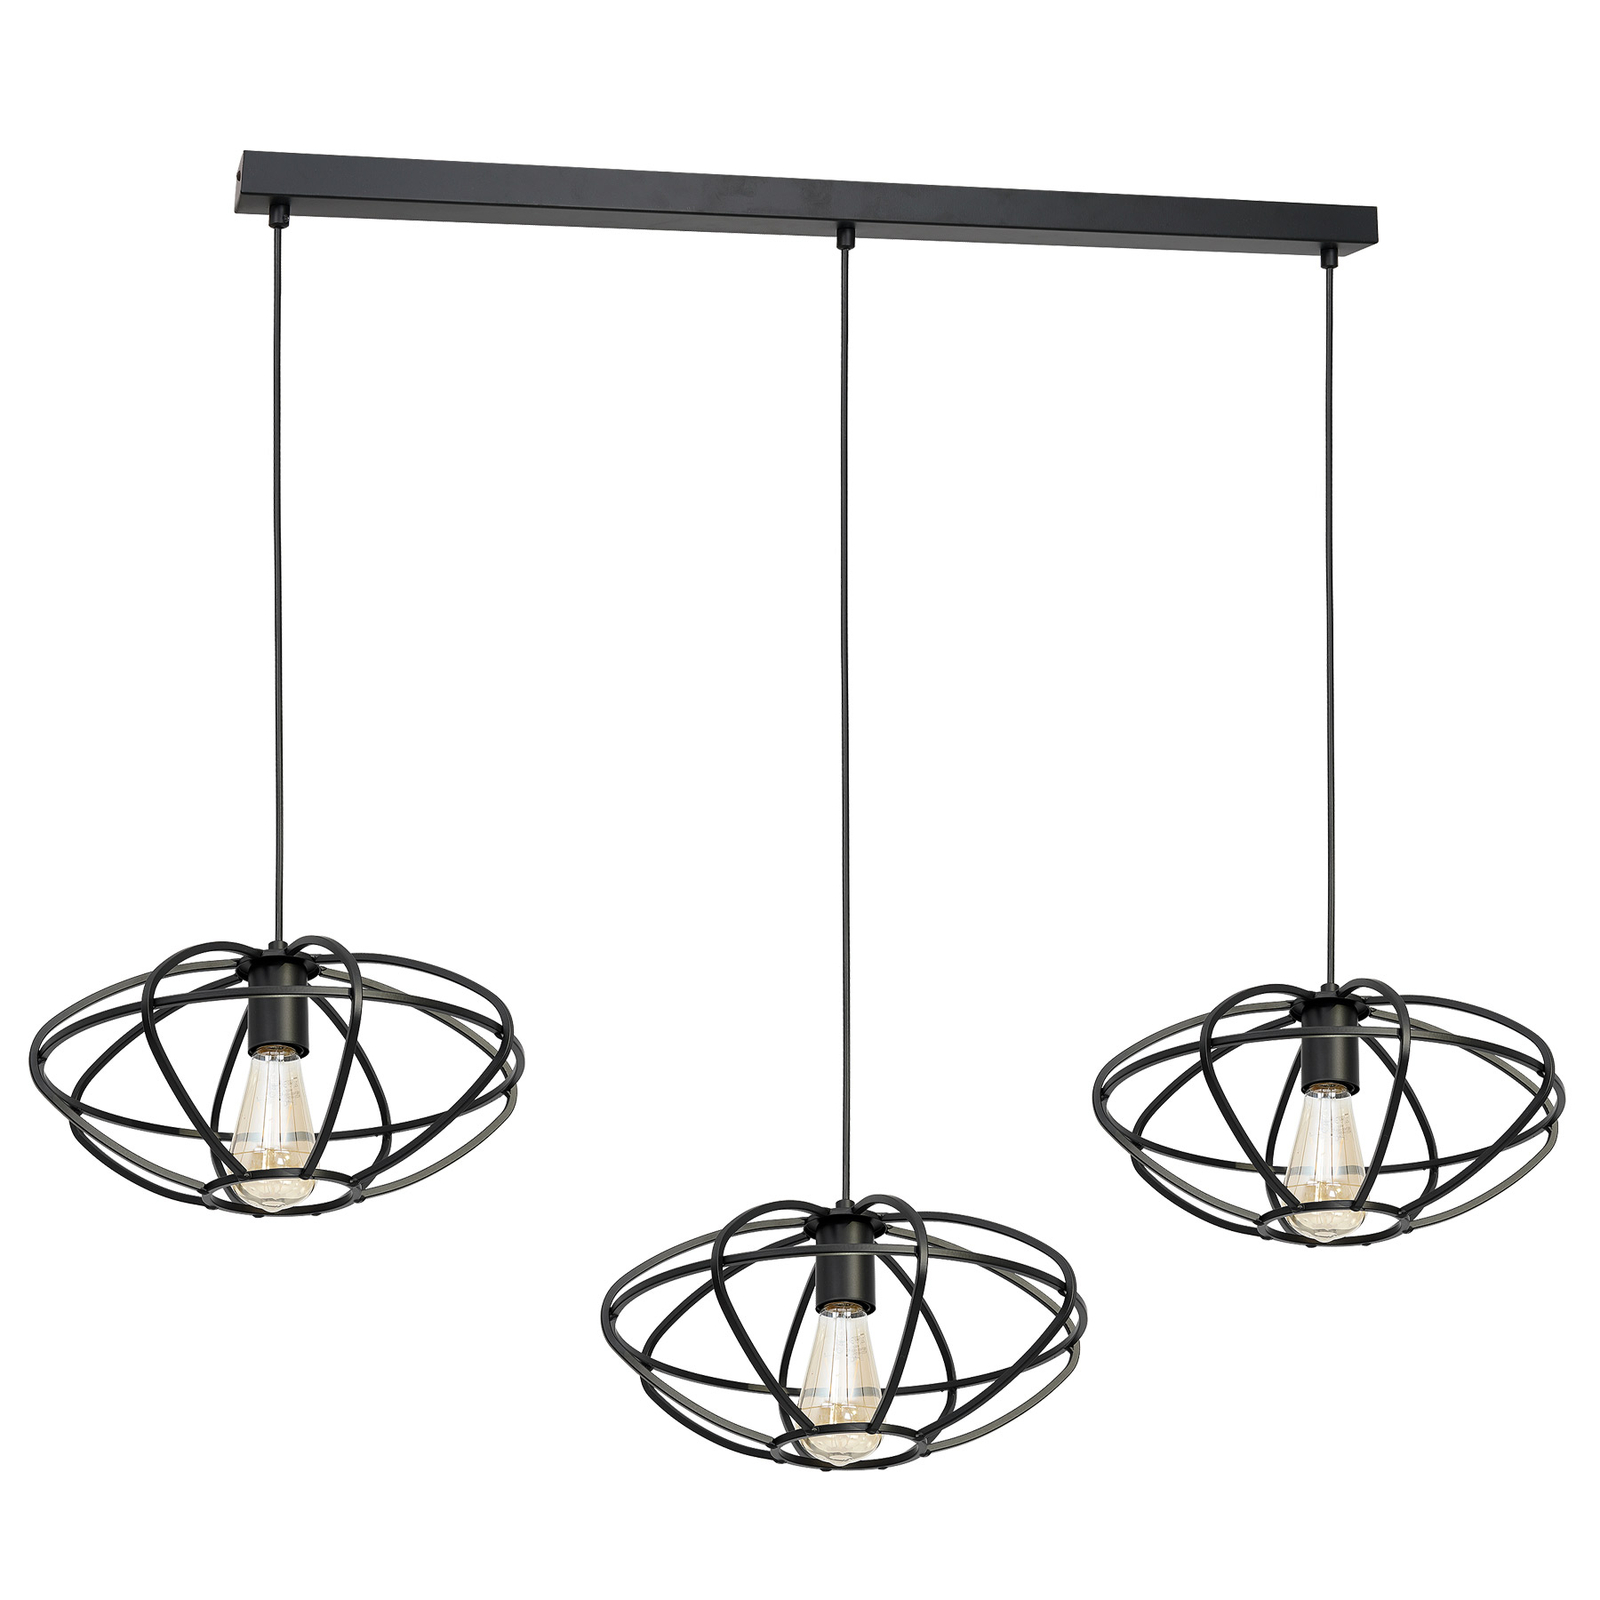 Epali hanging light cage lampshades, 3-bulb black